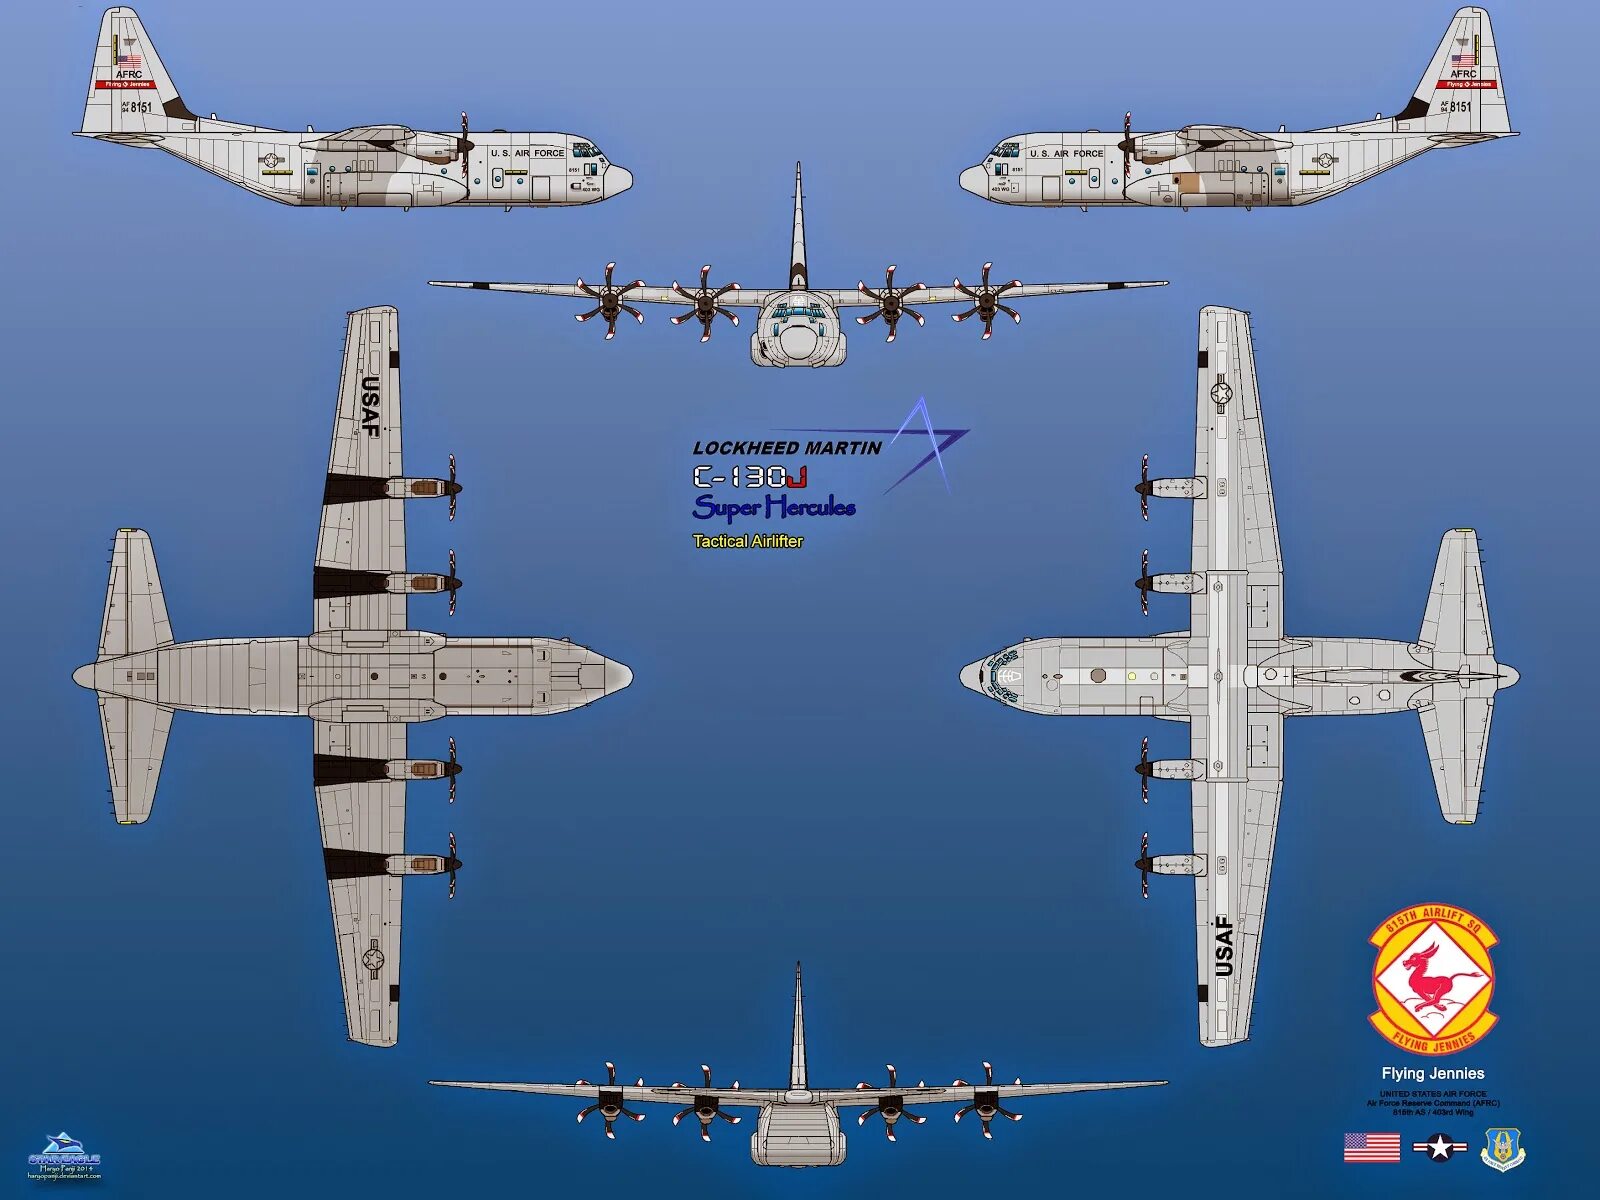 C ii ii ii 8. Lockheed Martin c-130j super Hercules. Lockheed c-130 Hercules. Lockheed Martin c-130j. C-130j-30 super Hercules.